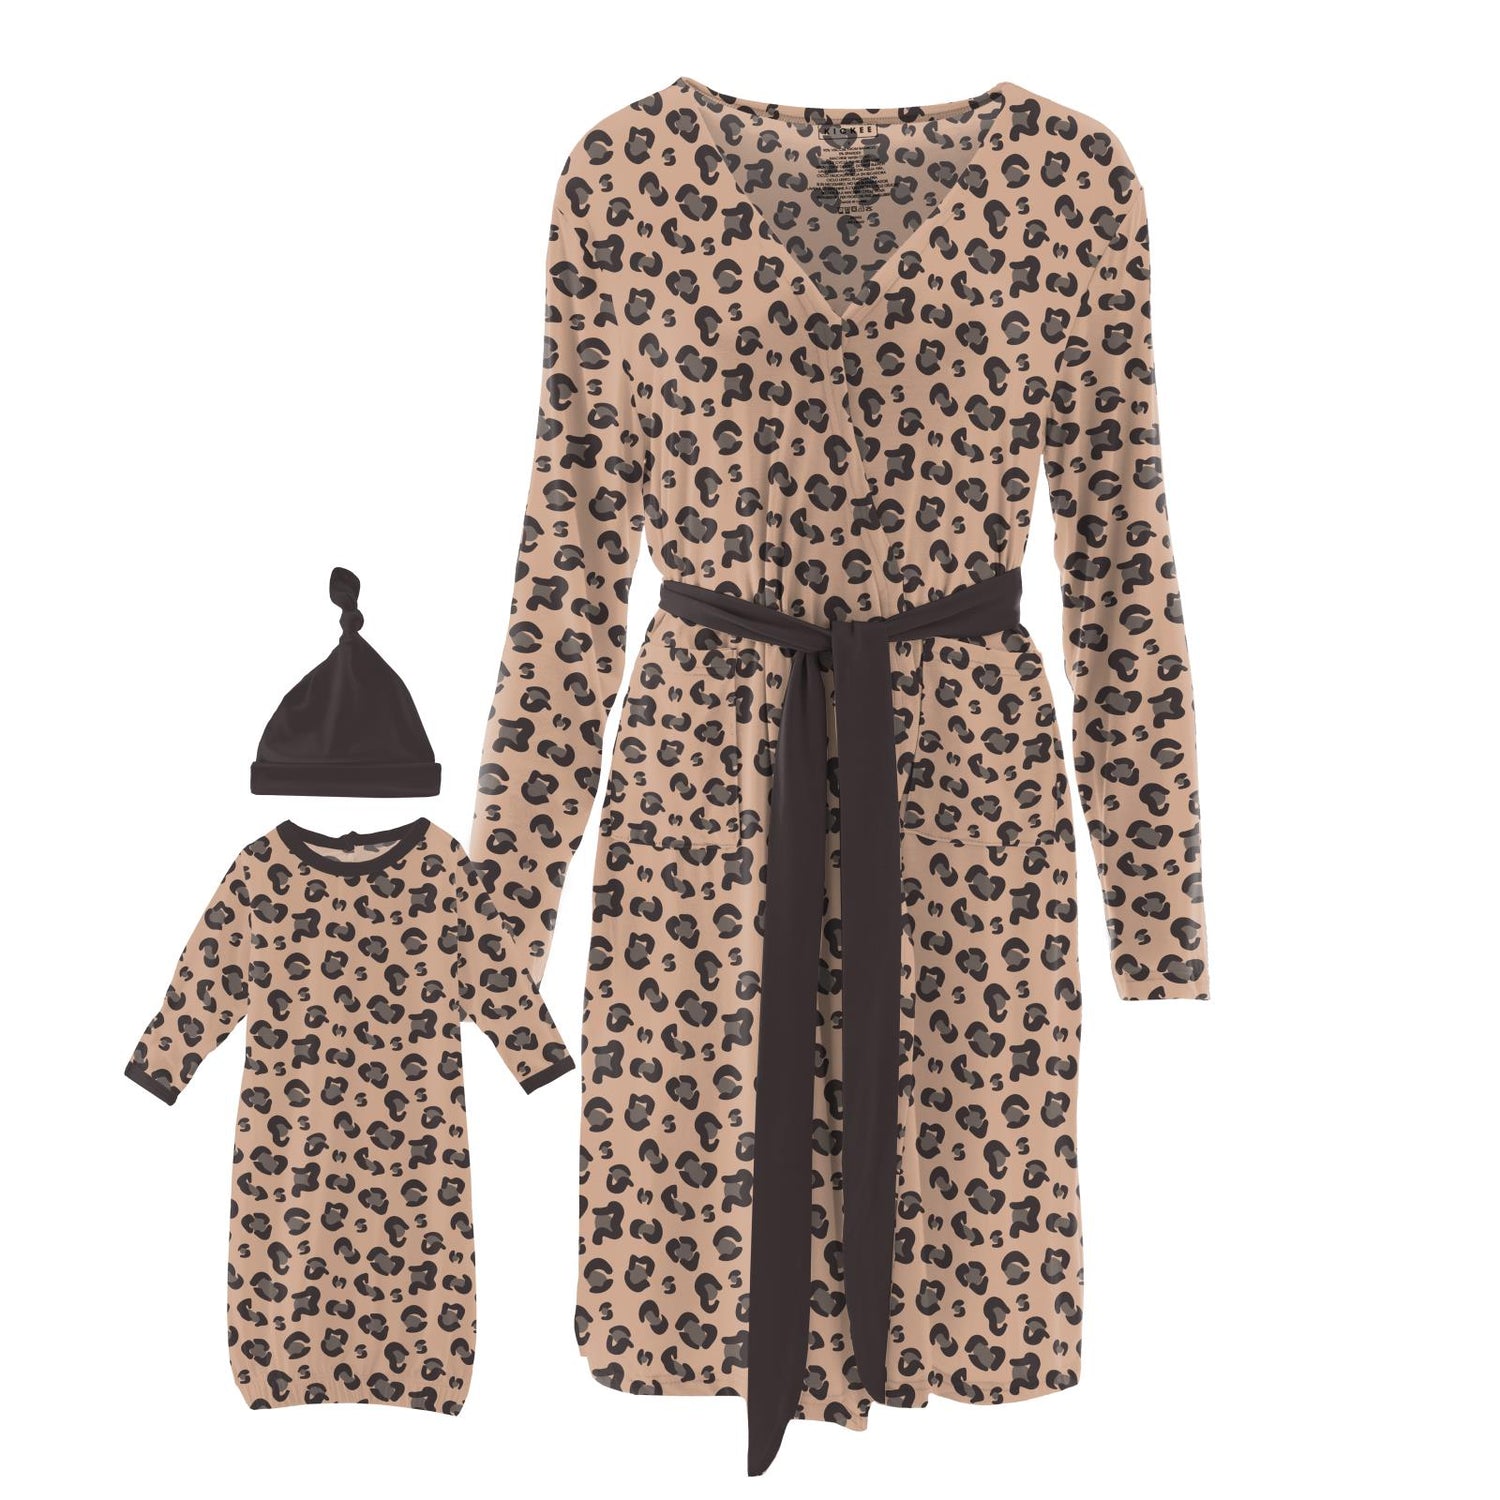 Women's Print Maternity/Nursing Robe & Layette Gown Set in Suede Cheetah Print